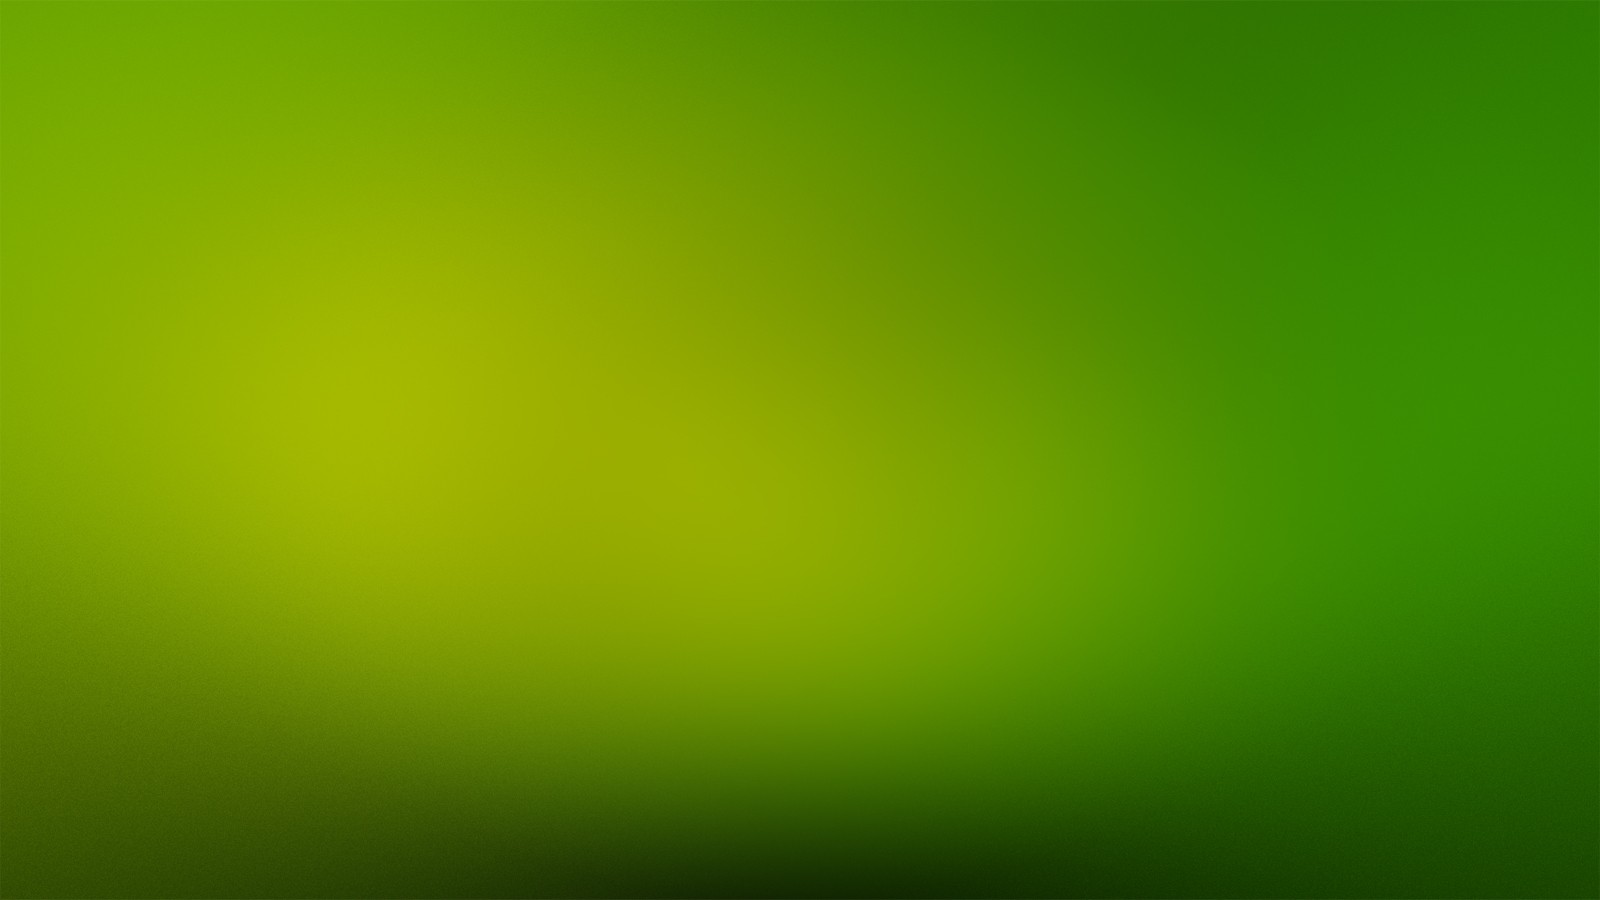 General 1600x900 green gradient digital art minimalism texture green background simple background